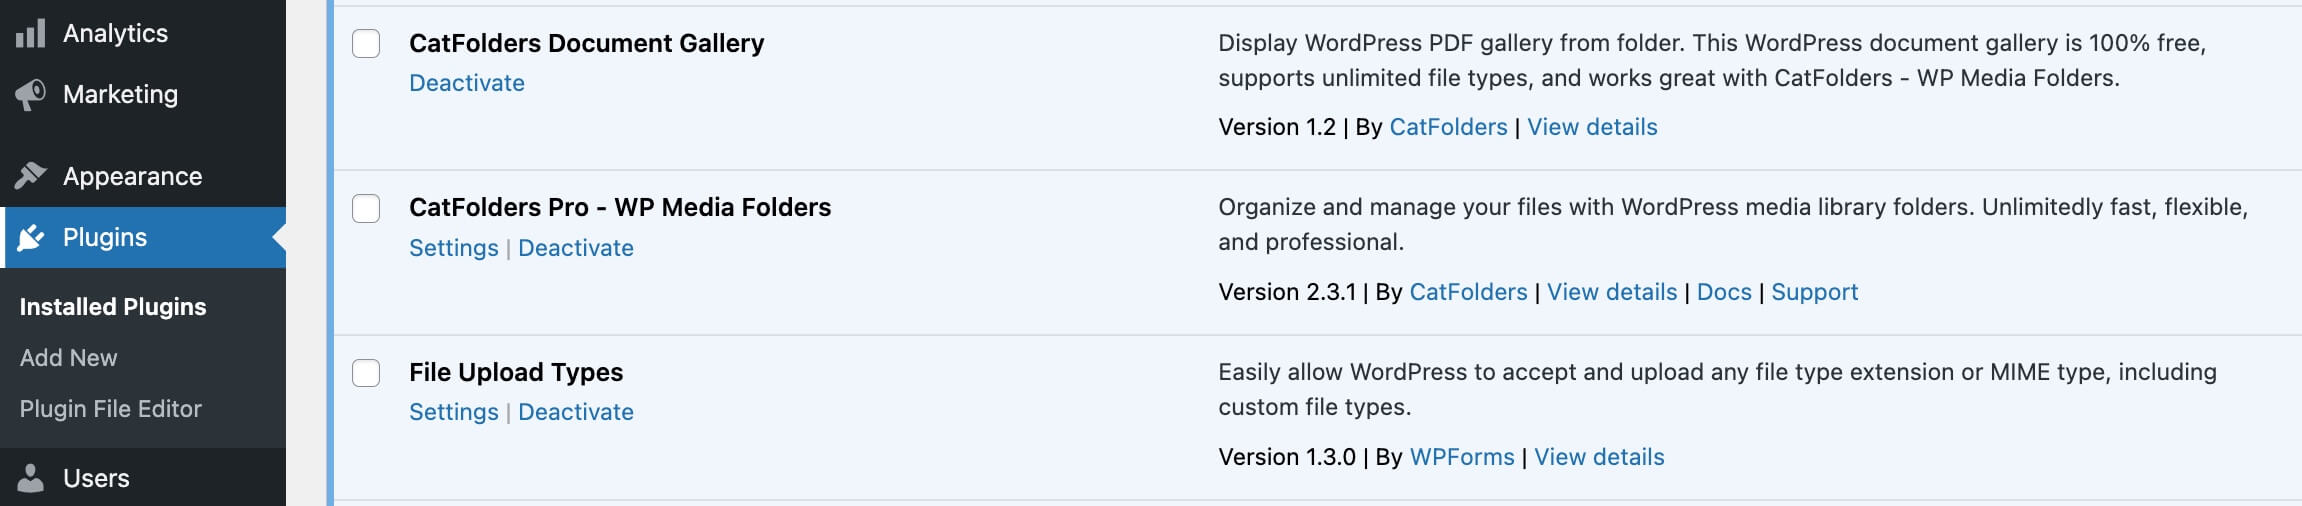 WordPress PDF gallery setup prerequisites